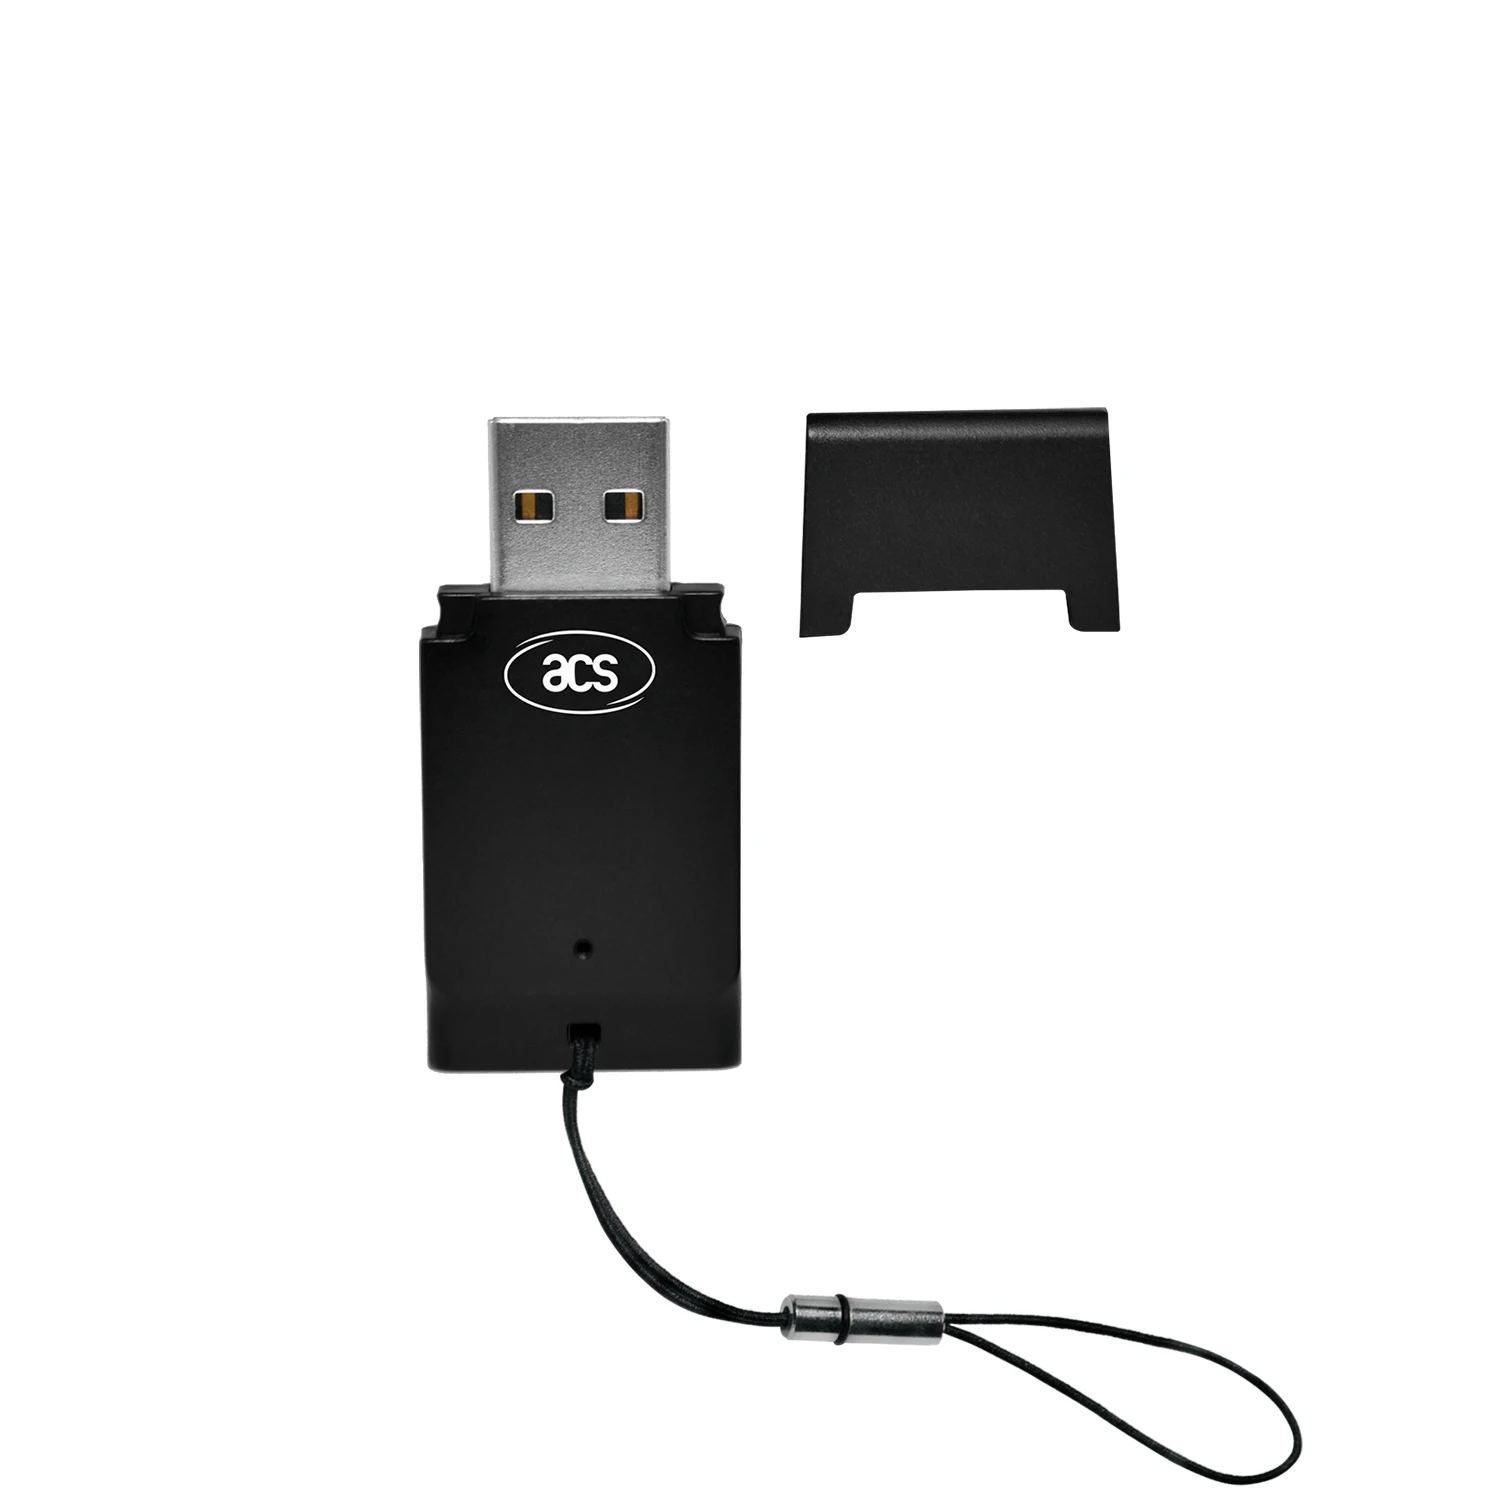 USB 4,8 МГц ISO 7816 Smart Card Reader с бесплатной SDK ACR39T-A1